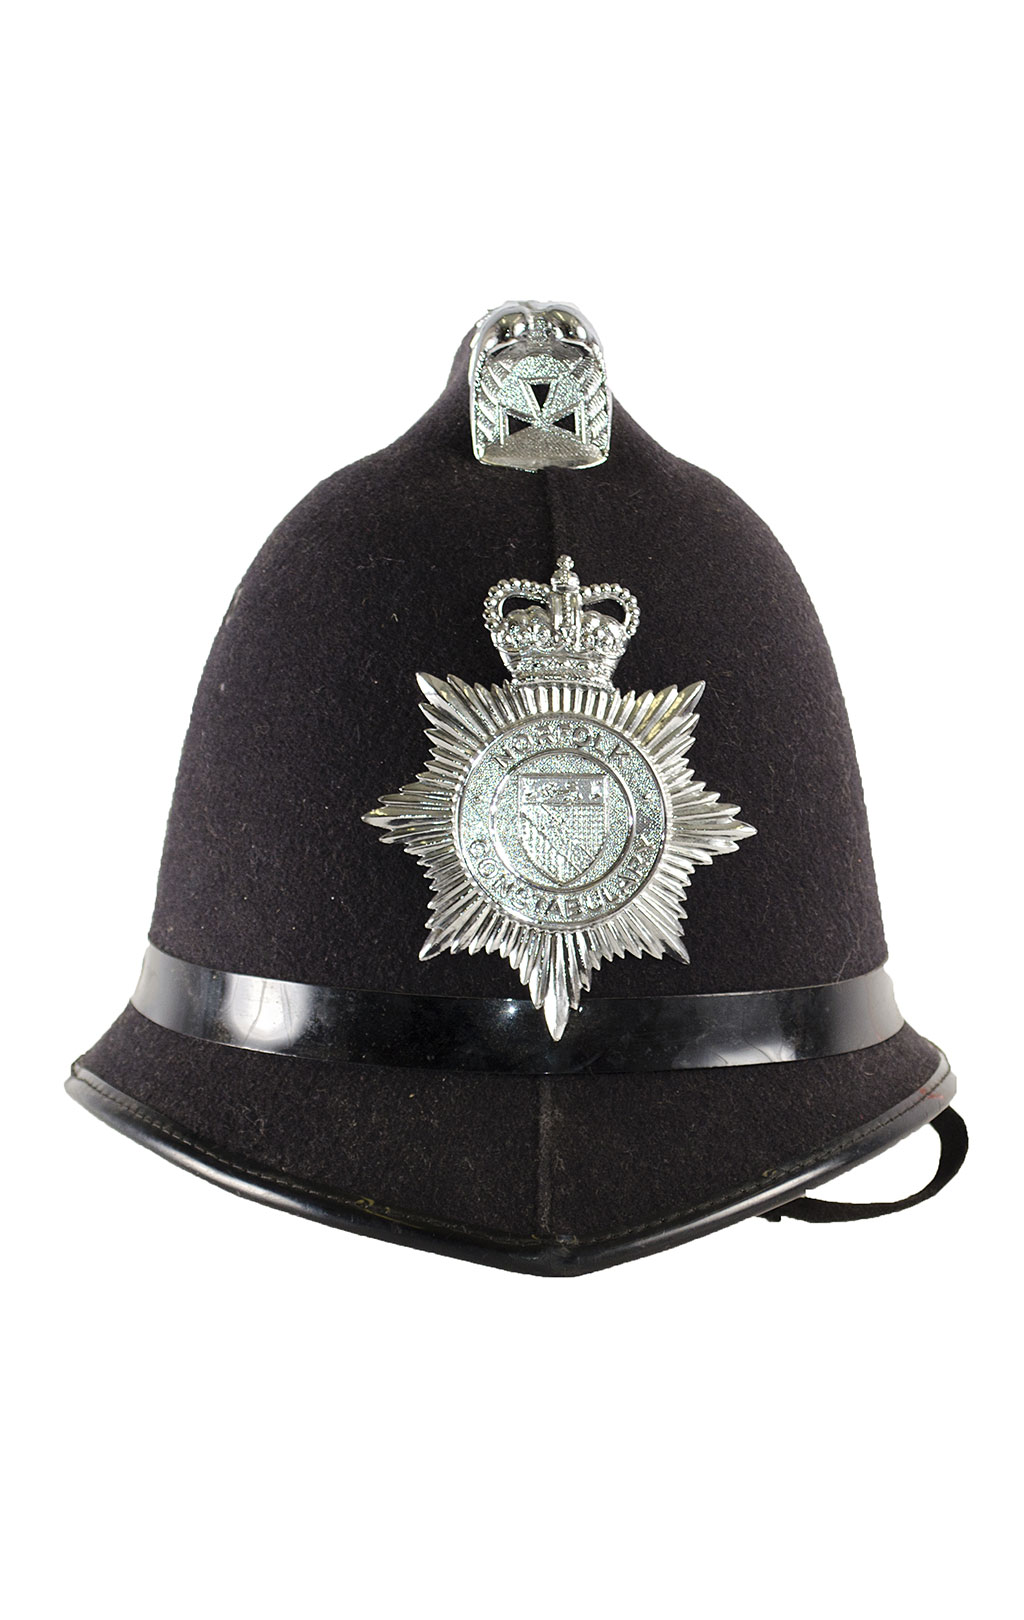 Шлем полицейский NORFOLK б/у Англия